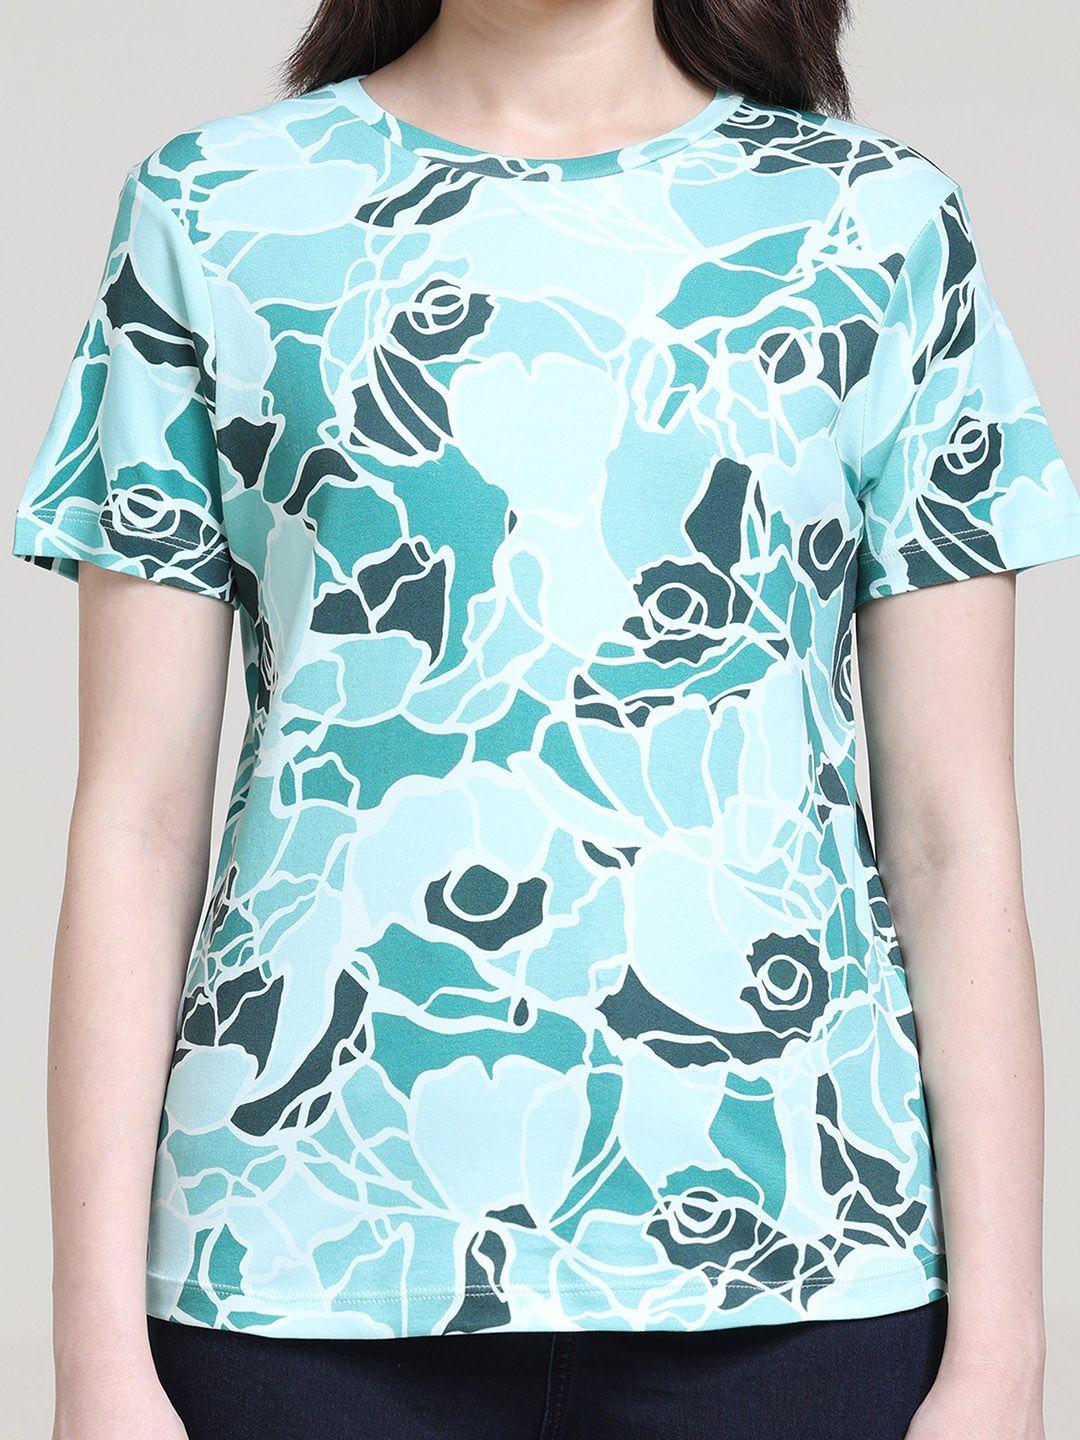 gloria-vanderbilt-floral-printed-cotton-t-shirt